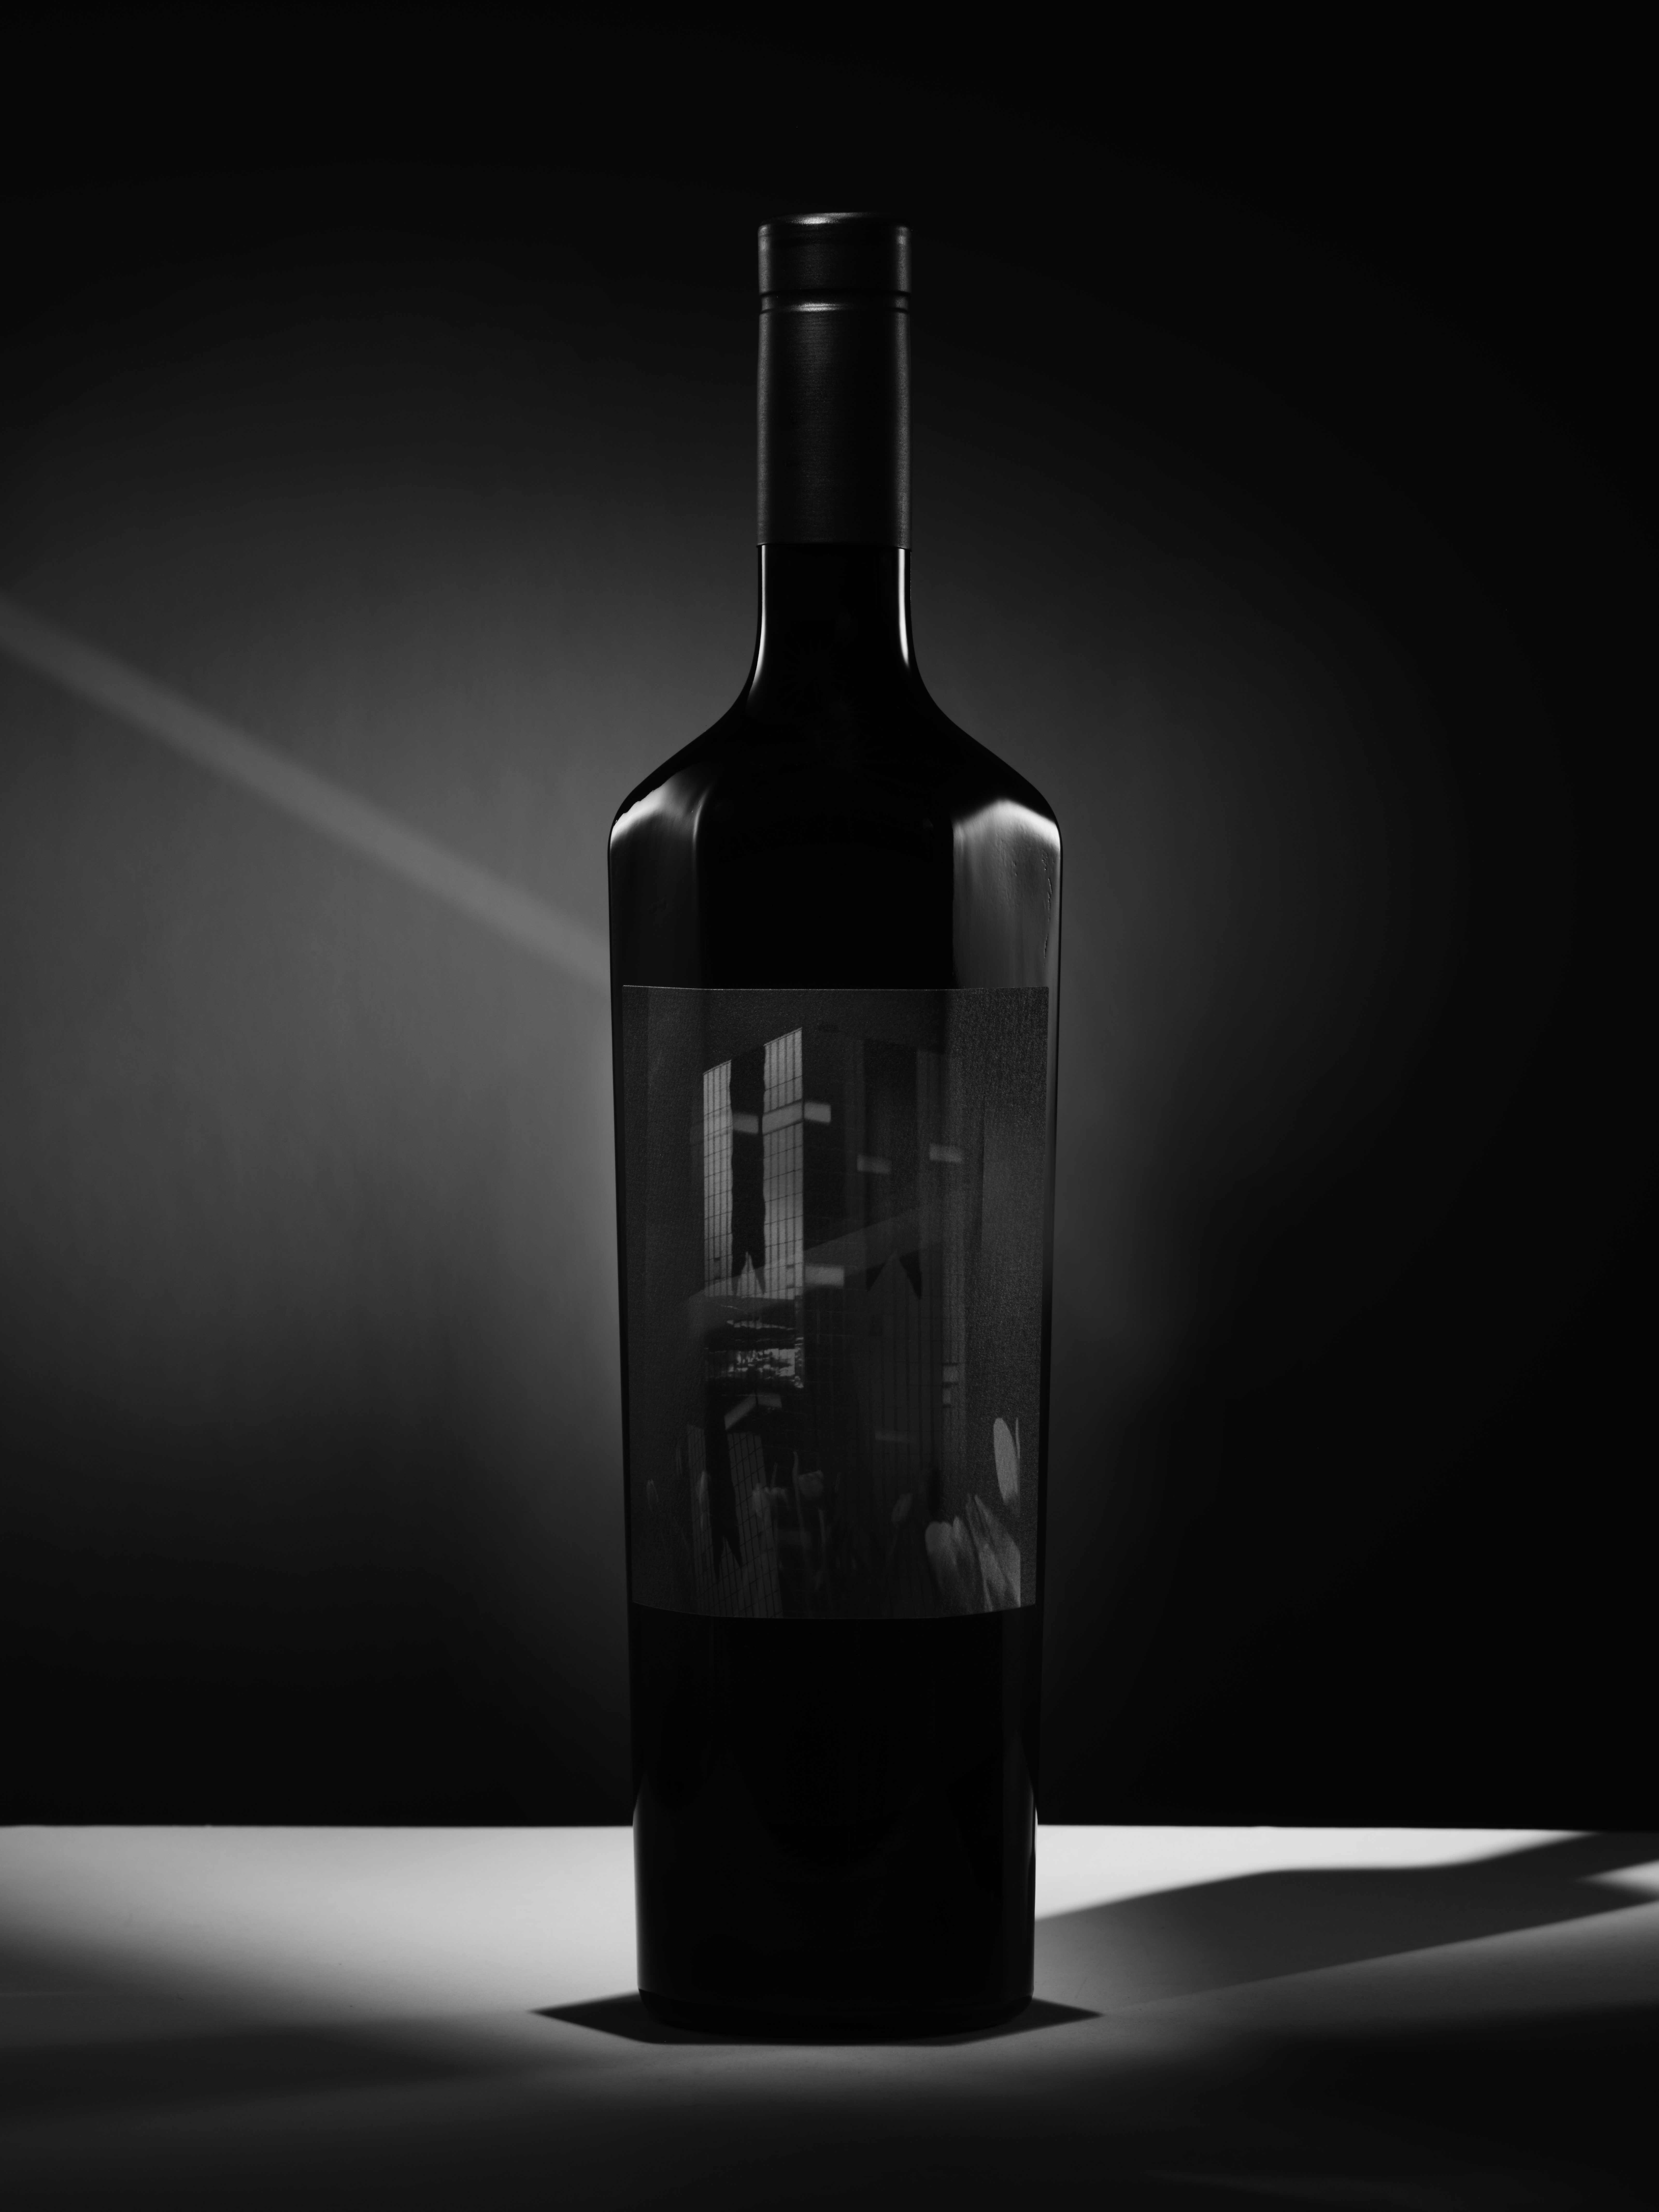 Sensoria Intrigue labeled bottle